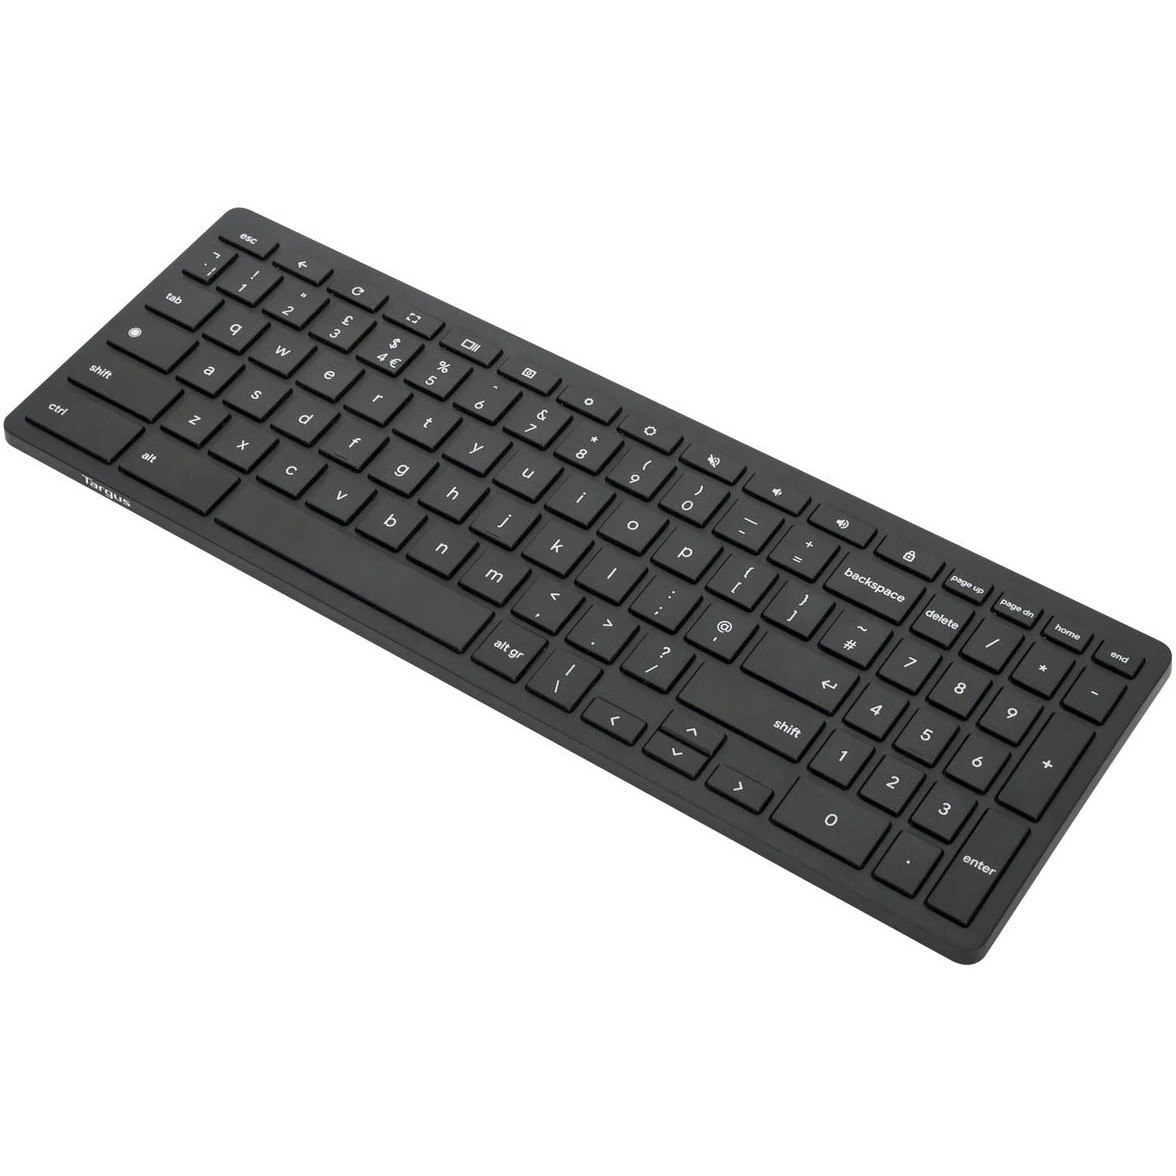 Targus AKB872UK Keyboard - Wireless Connectivity - English (UK) - QWERTY Layout - Black